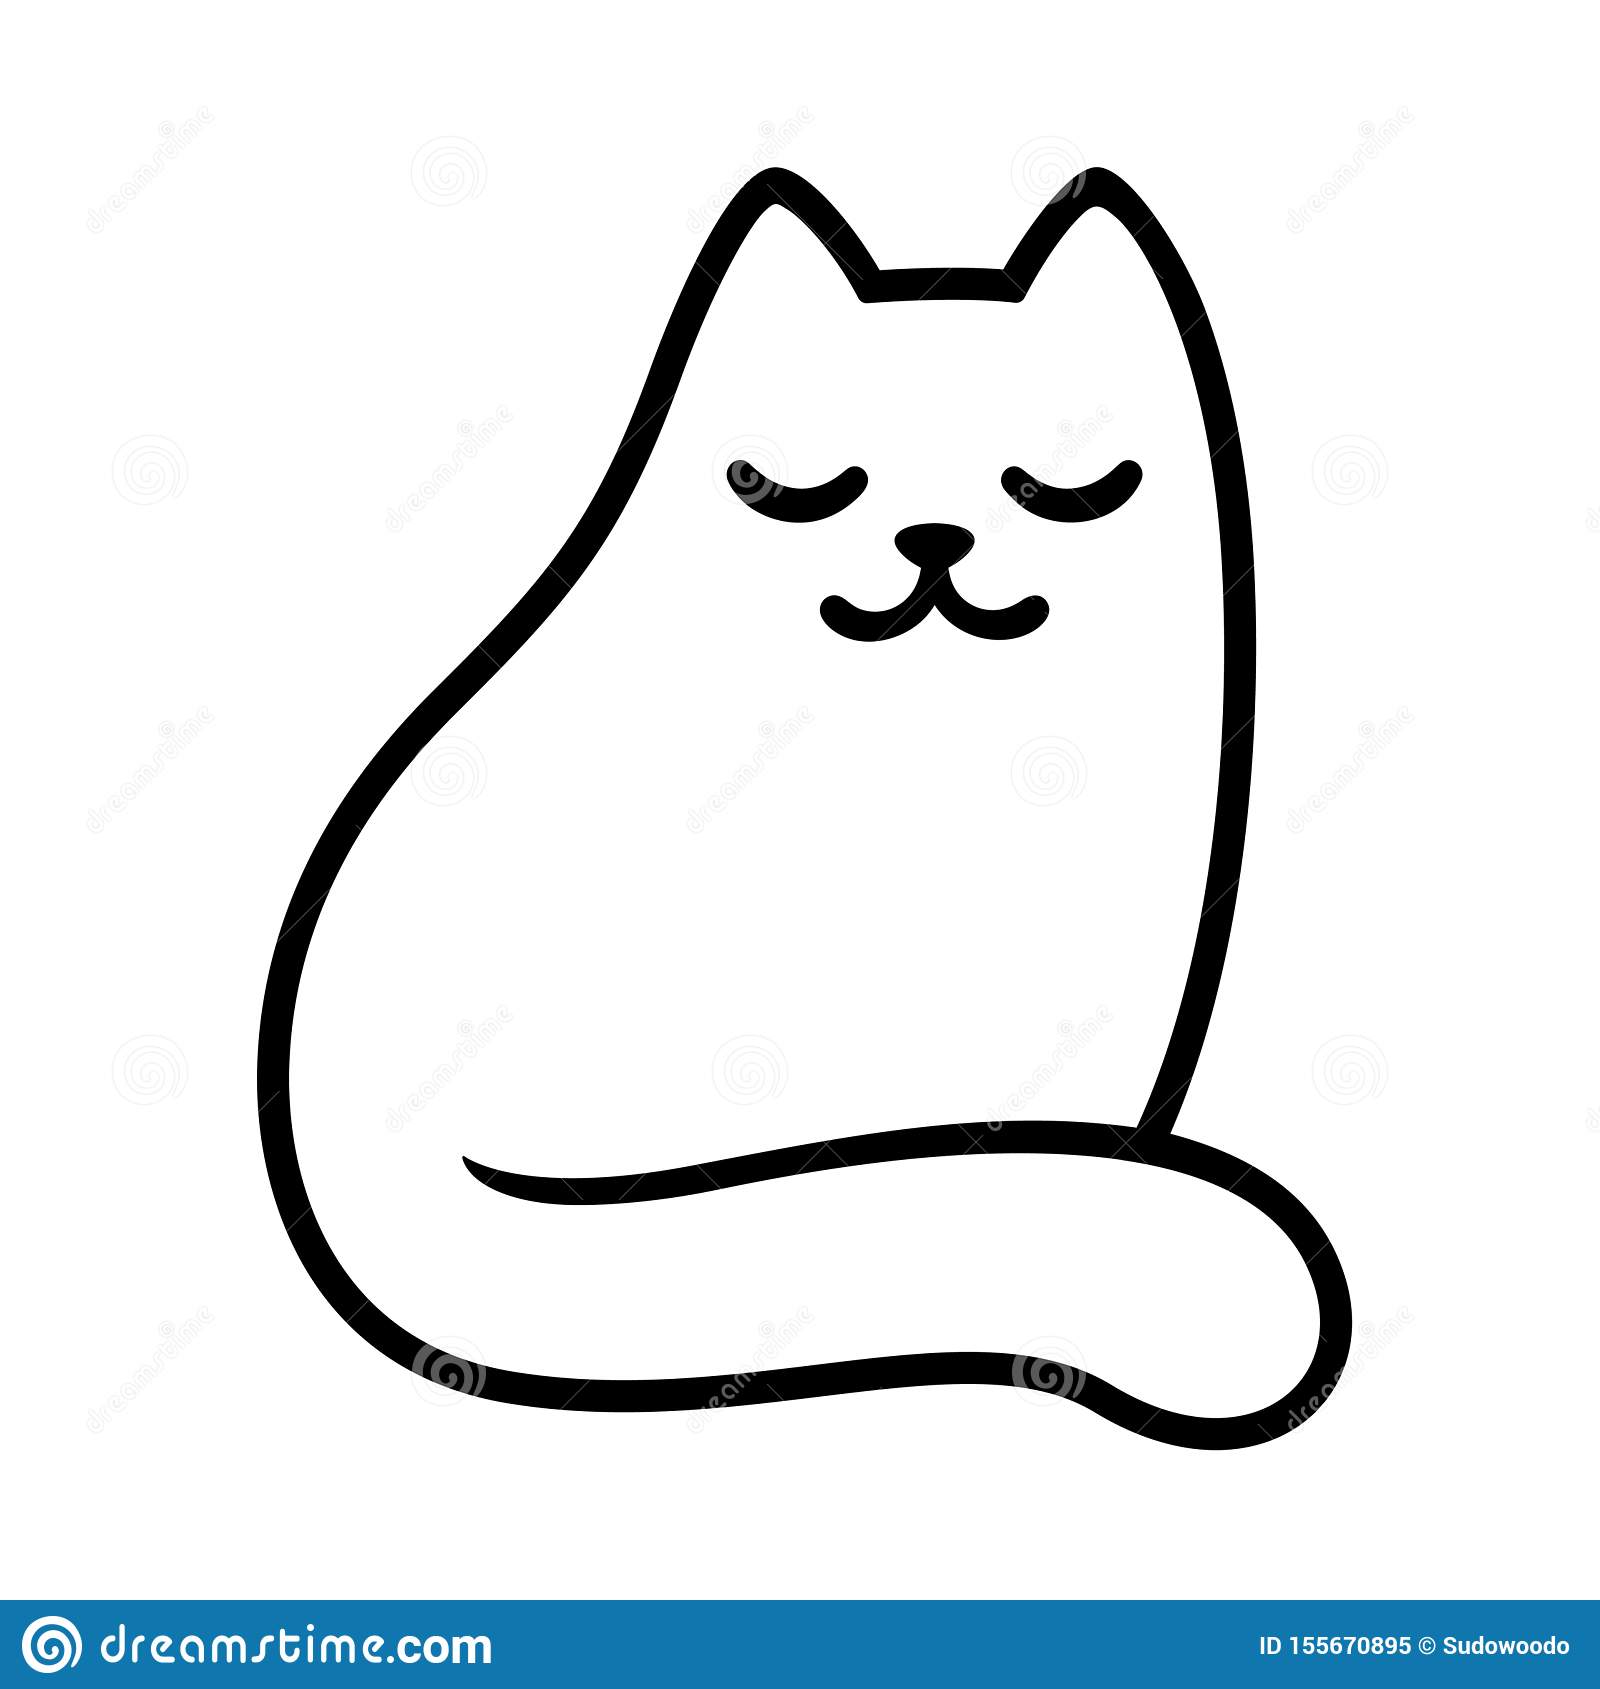 Cartoon white cat drawing stock vector. Illustration of